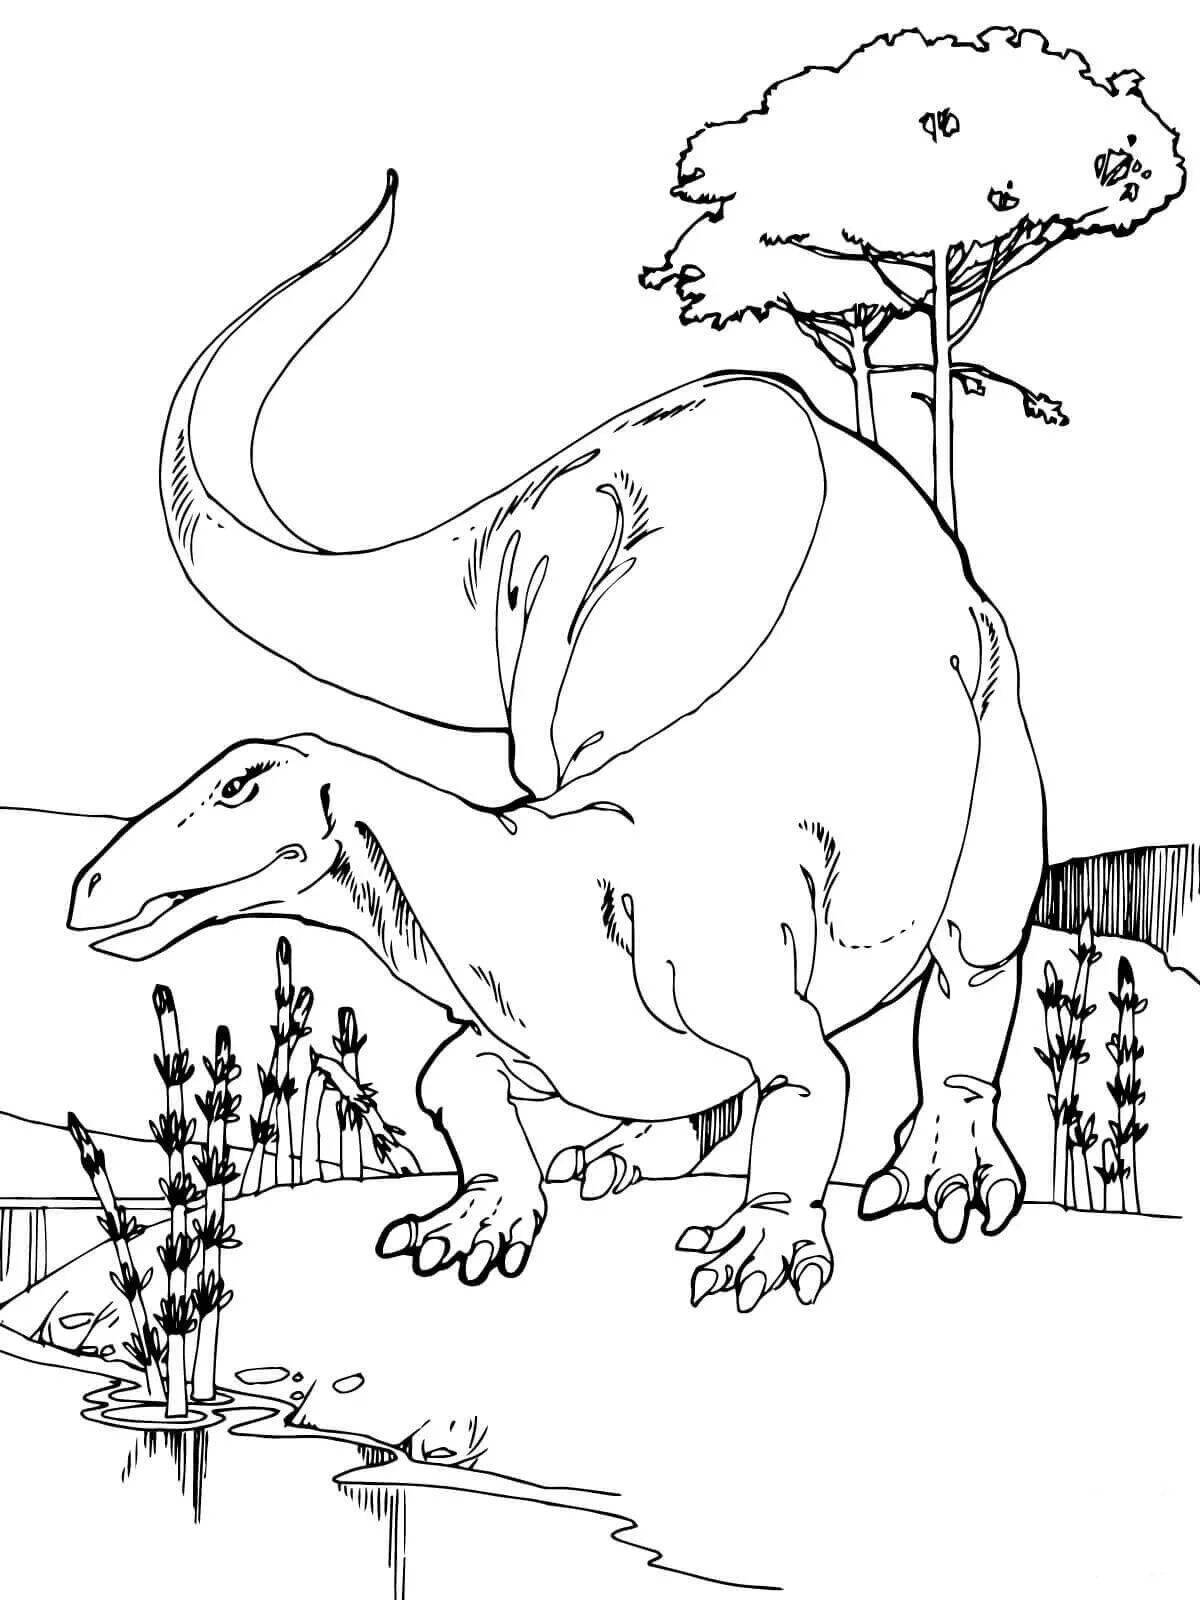 Scary Jurassic dinosaur coloring book